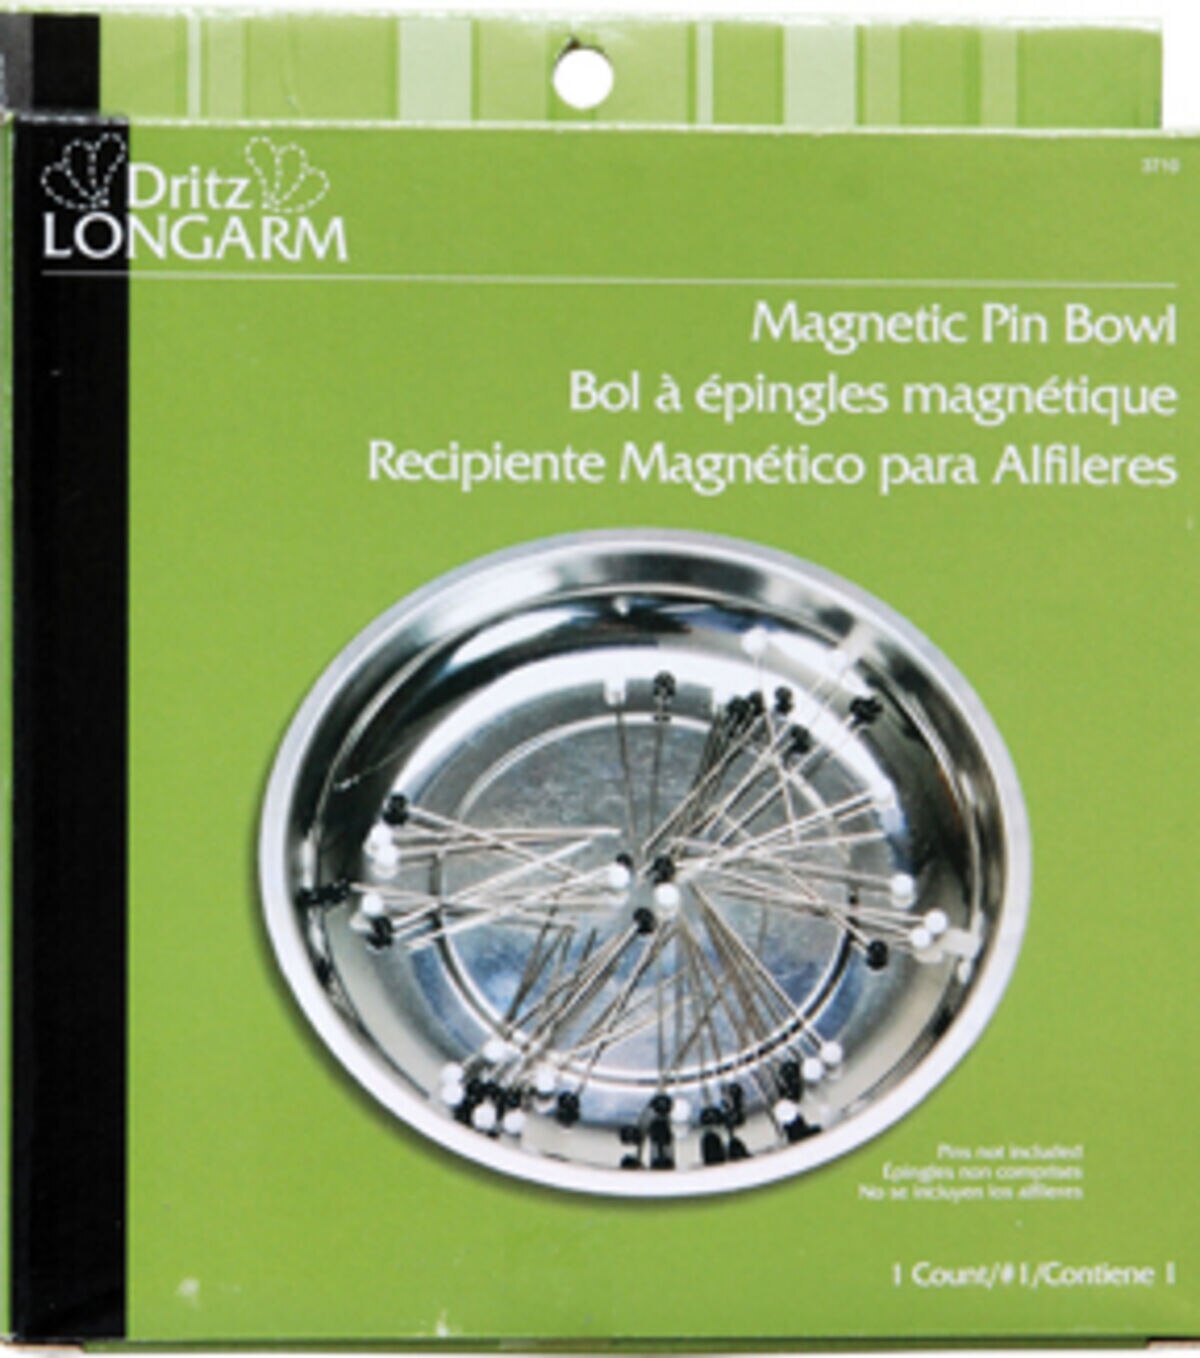 Dritz Acciaio Longarm Magnetico Pin Bowl 